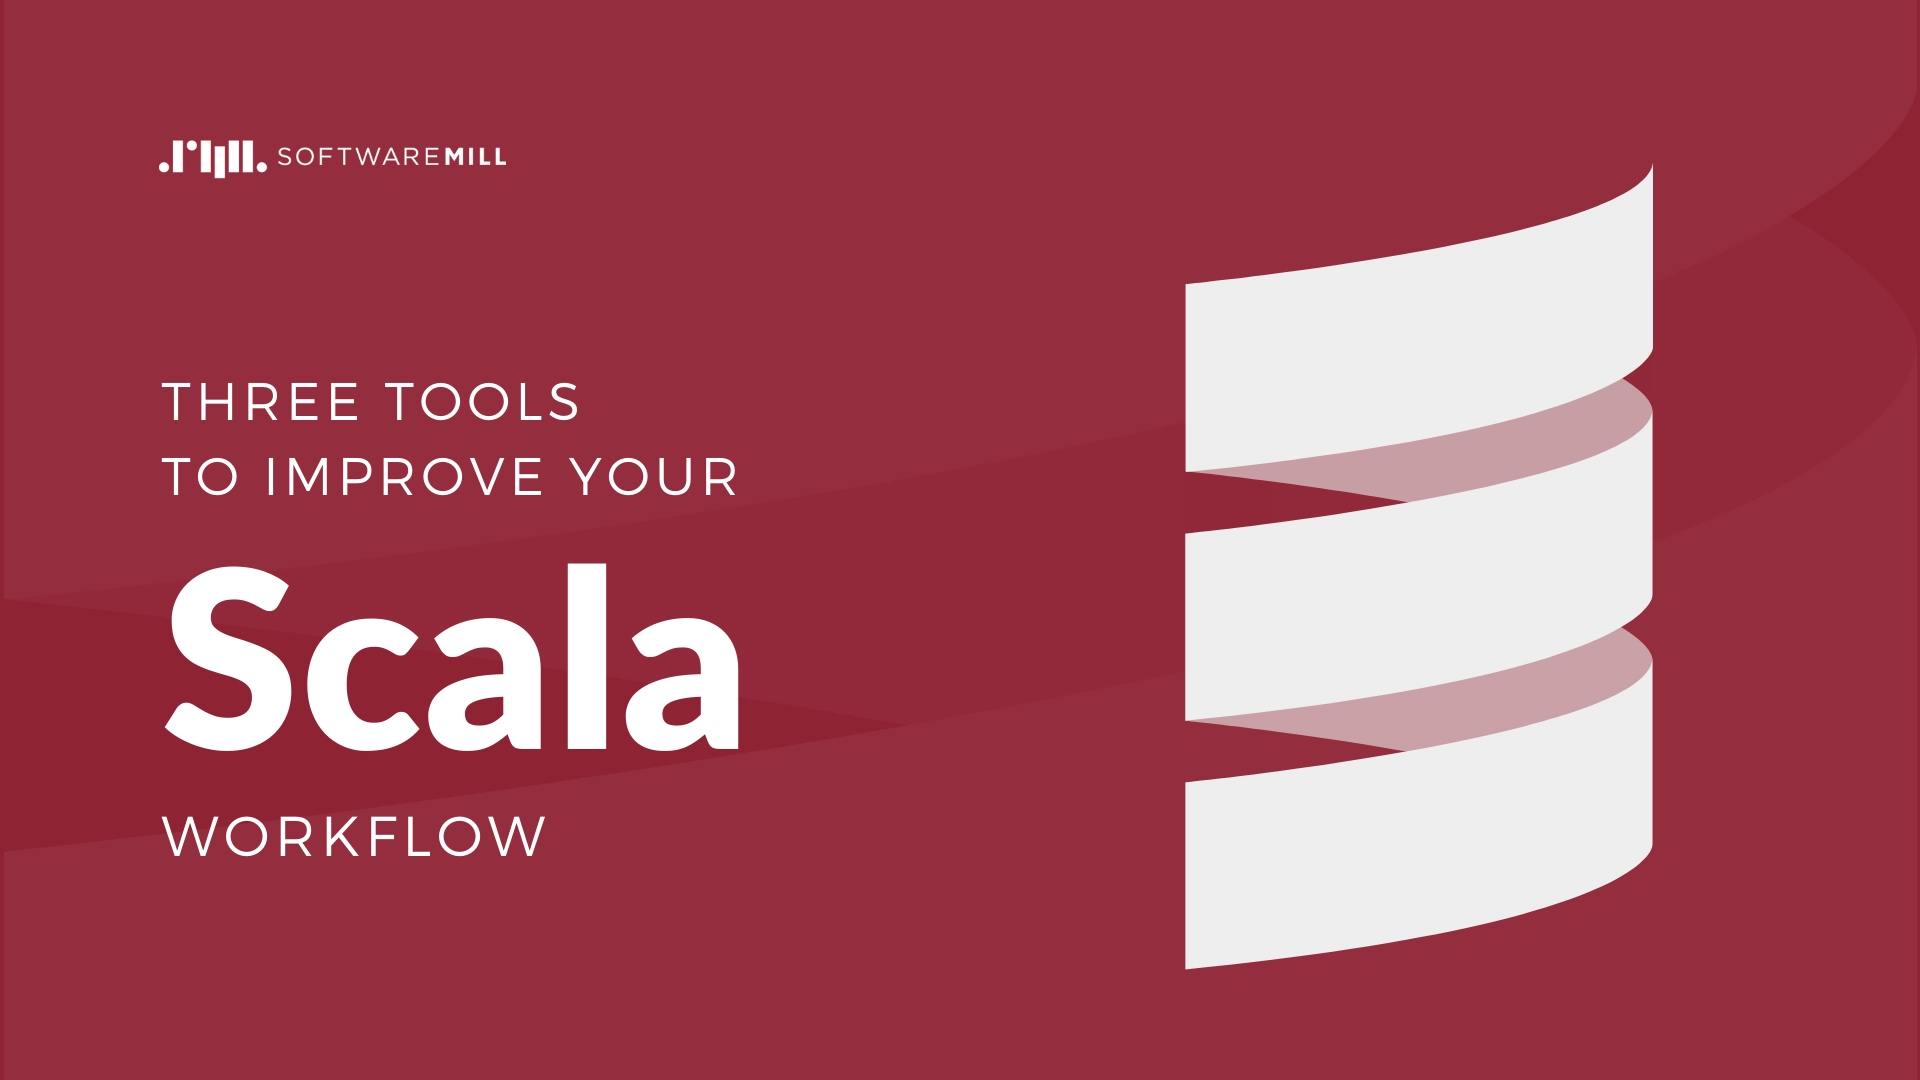 Three tools to improve your Scala workflow webp image